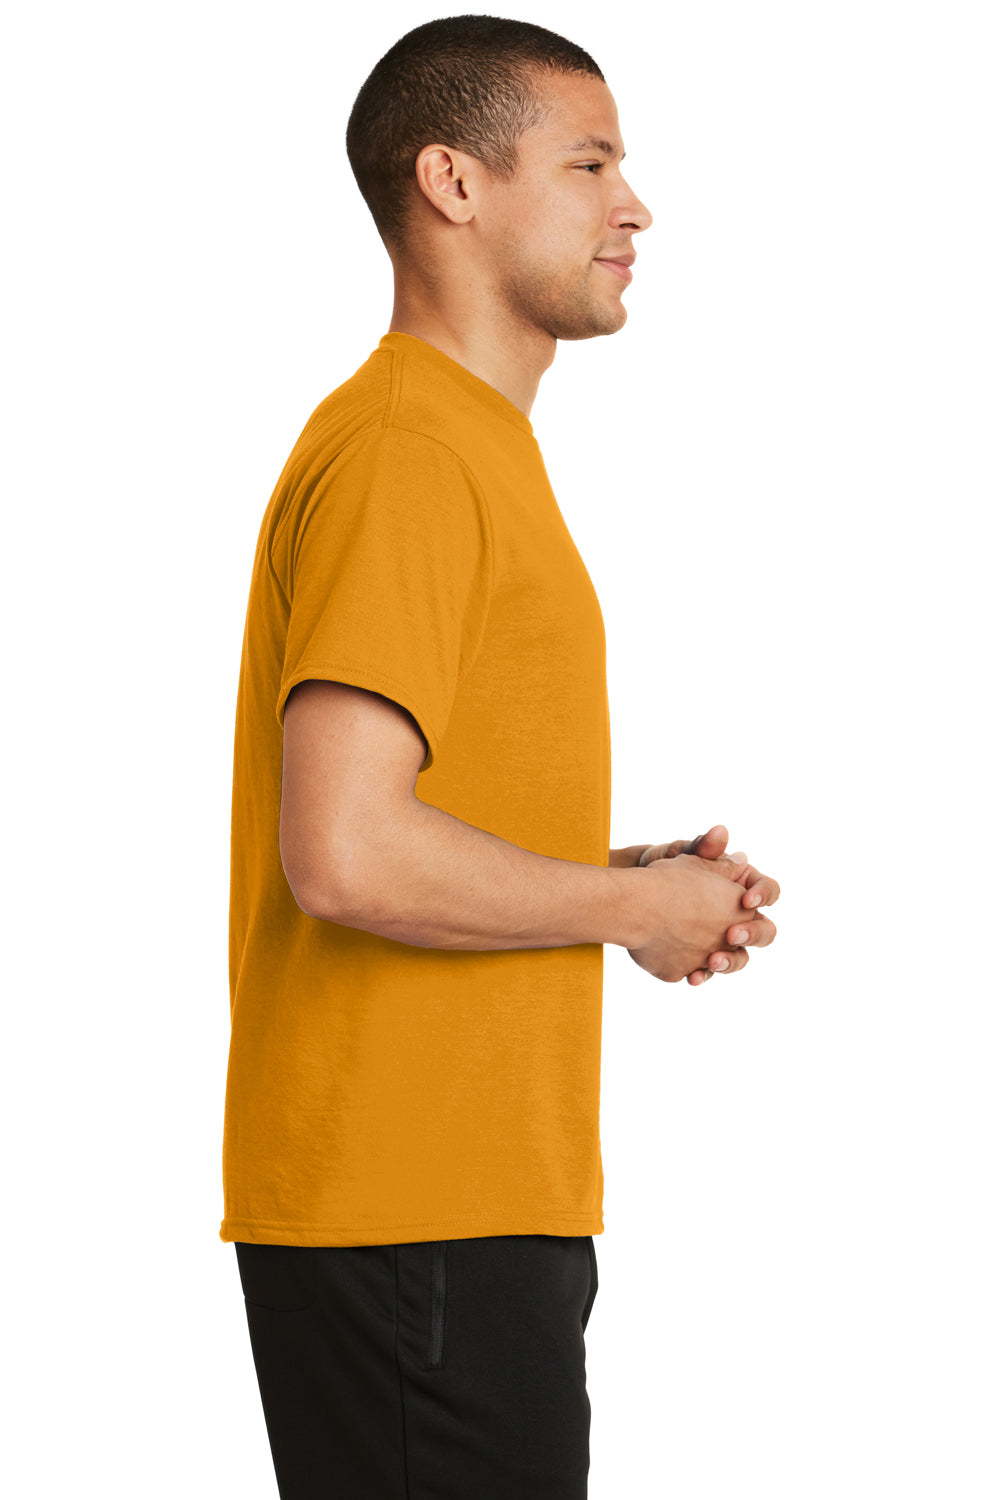 Port & Company PC381 Mens Dry Zone Performance Moisture Wicking Short Sleeve Crewneck T-Shirt Gold Side